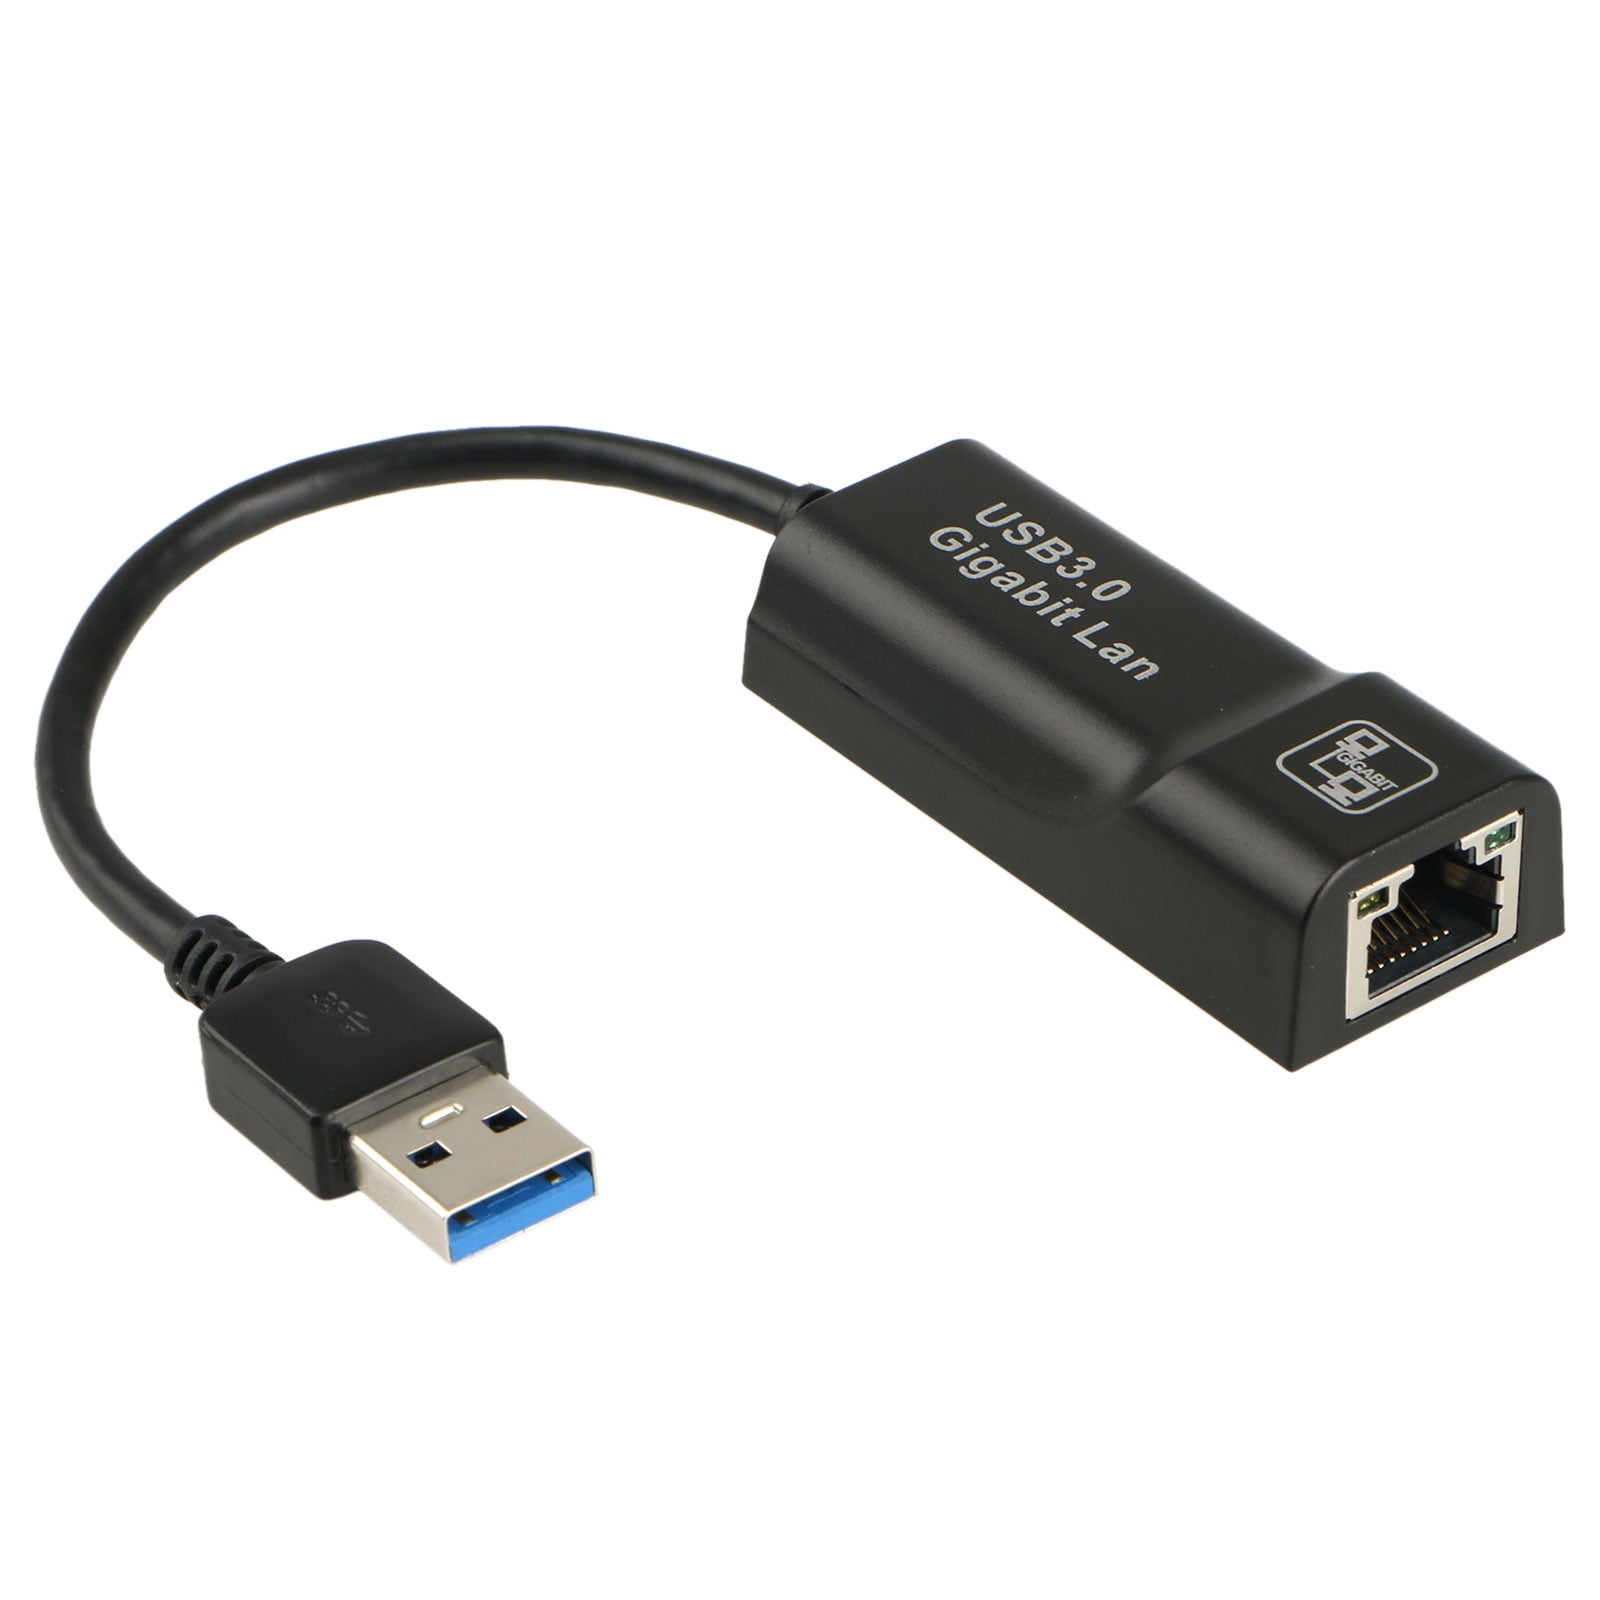 USB 3.0 to 10/100/1000 Mbps Gigabit RJ45 Ethernet LAN Network Adapter For PC Mac 